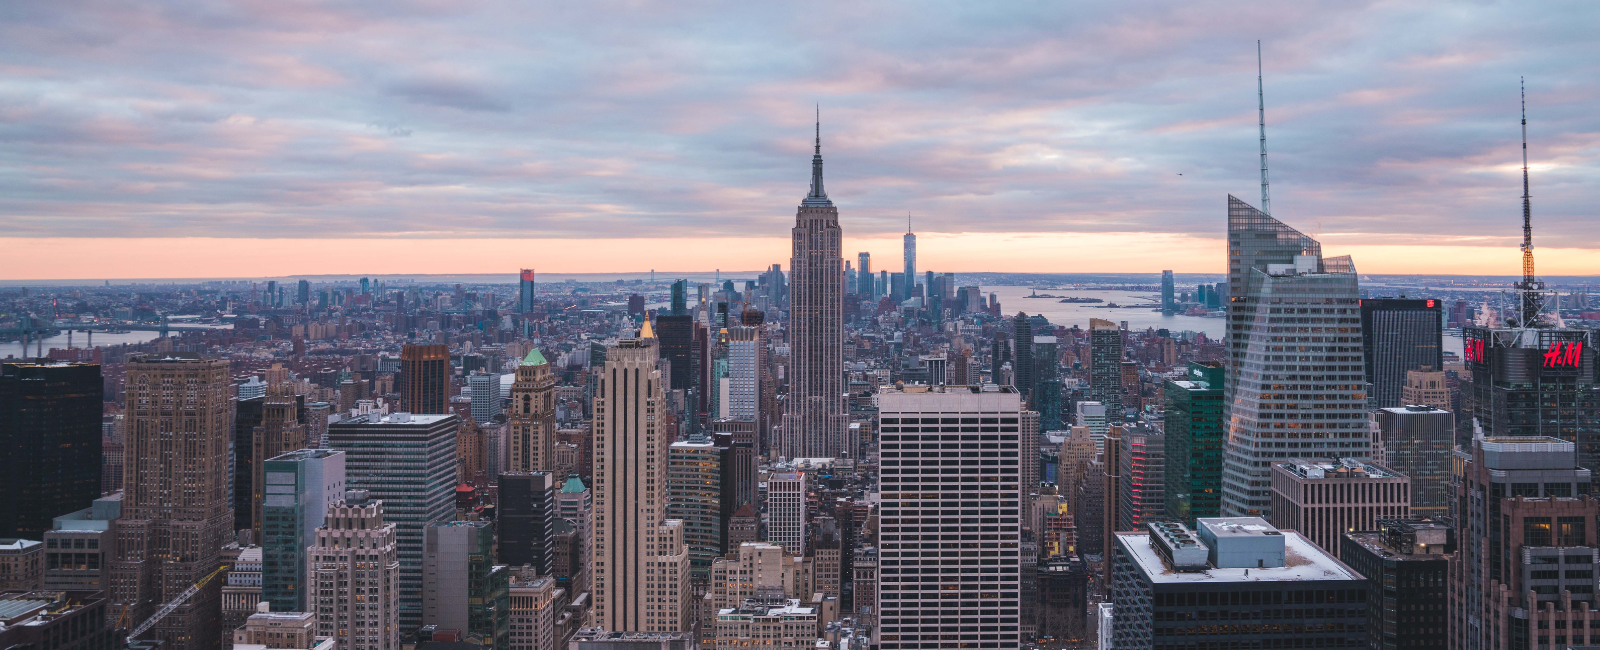 Skyline of buildings in New York City